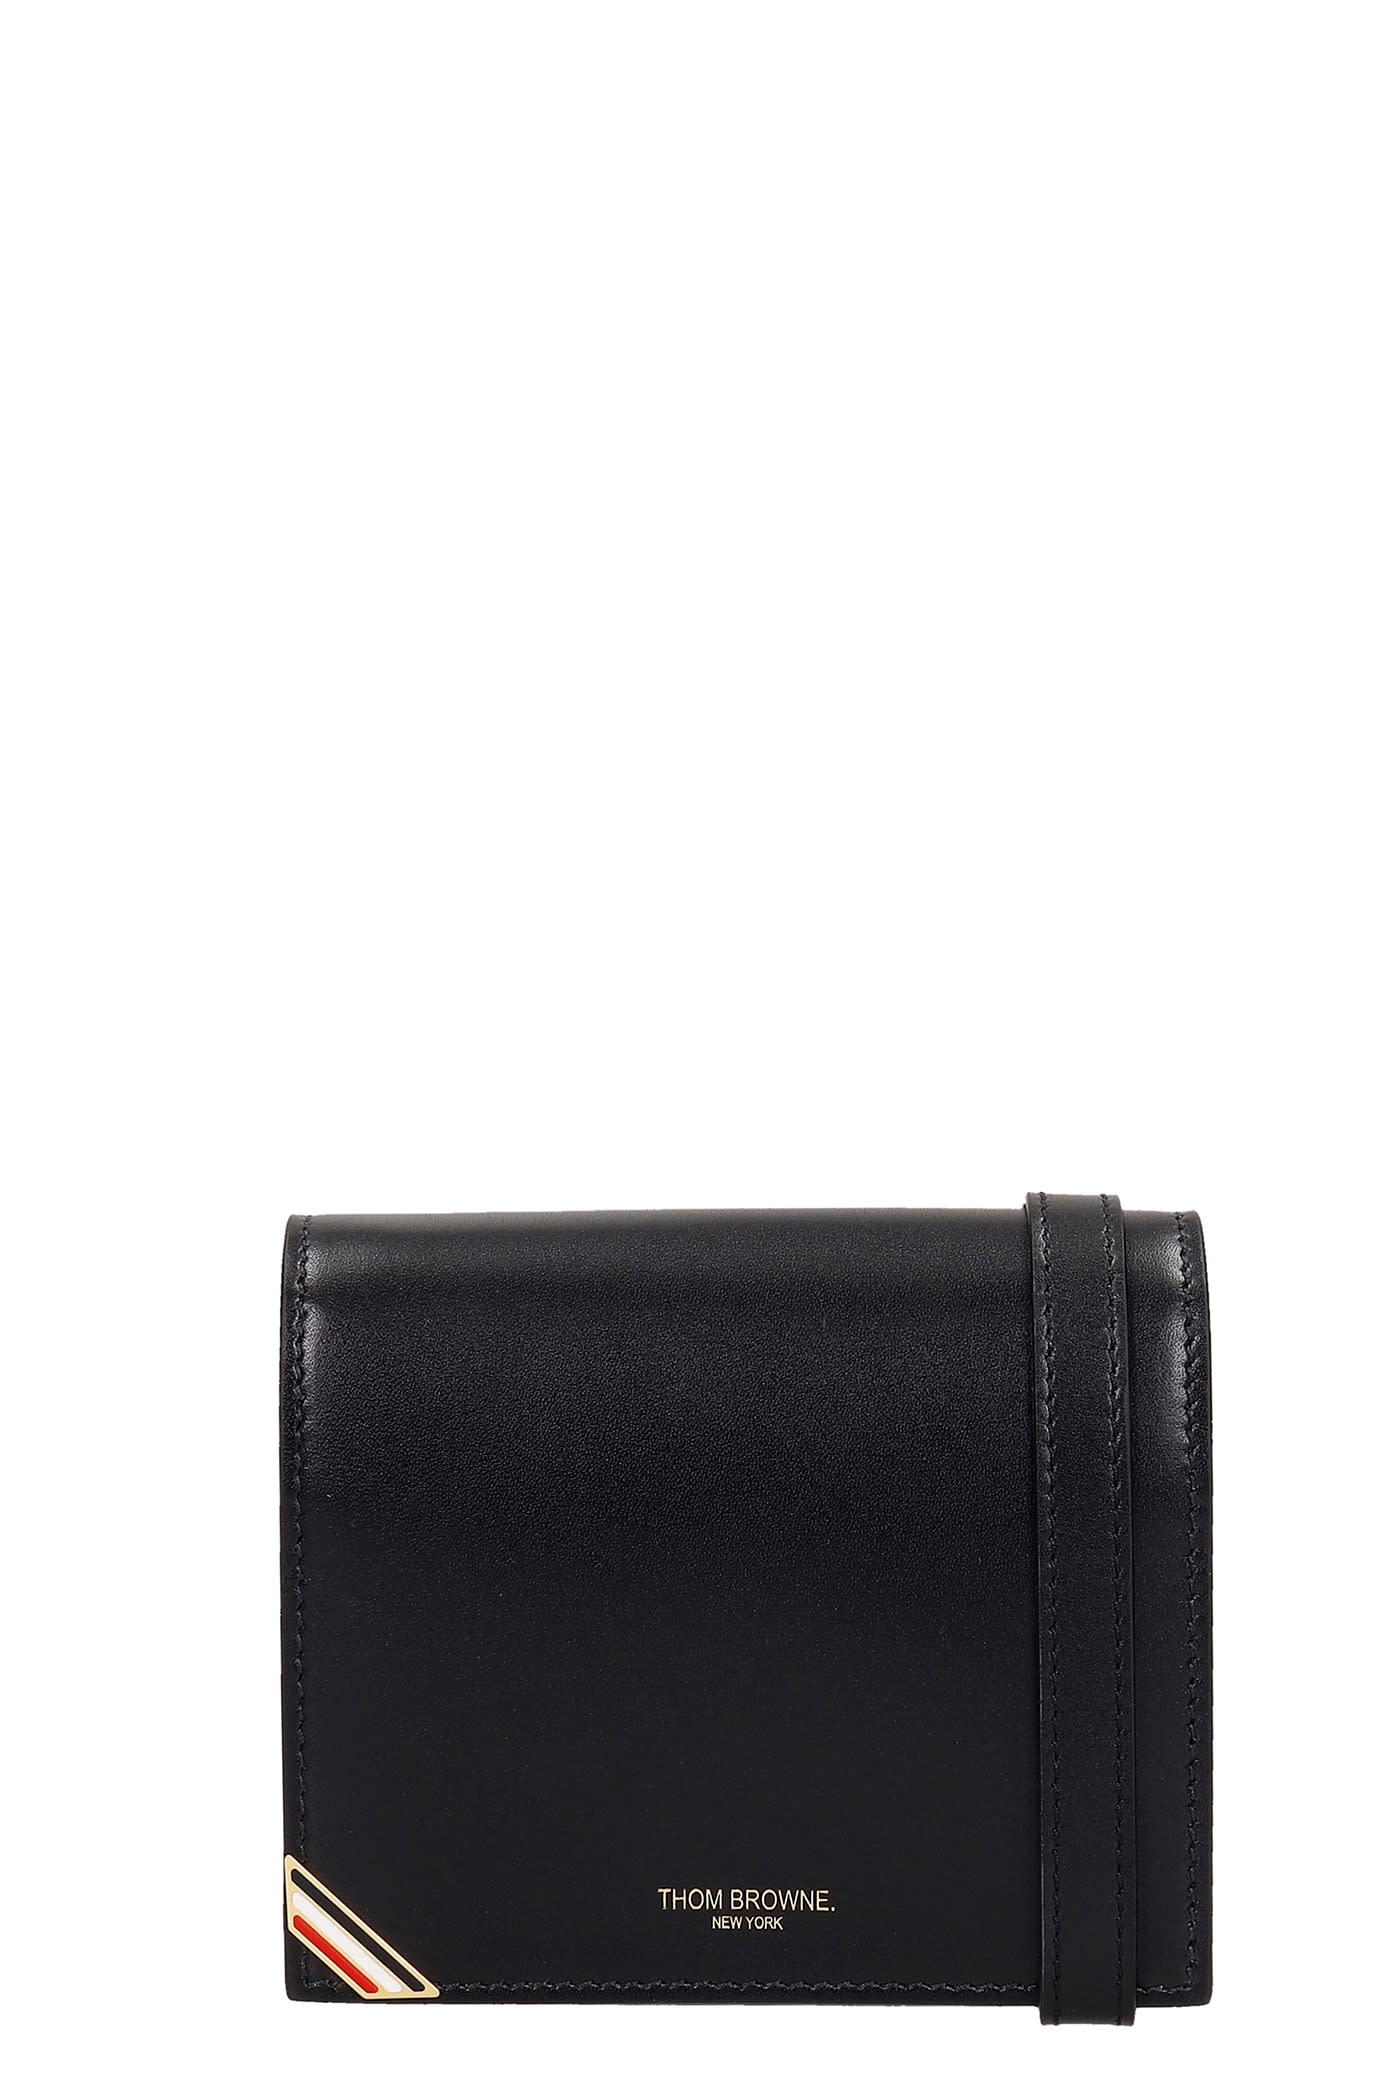 Thom Browne Shoulder Bag In Black Leather